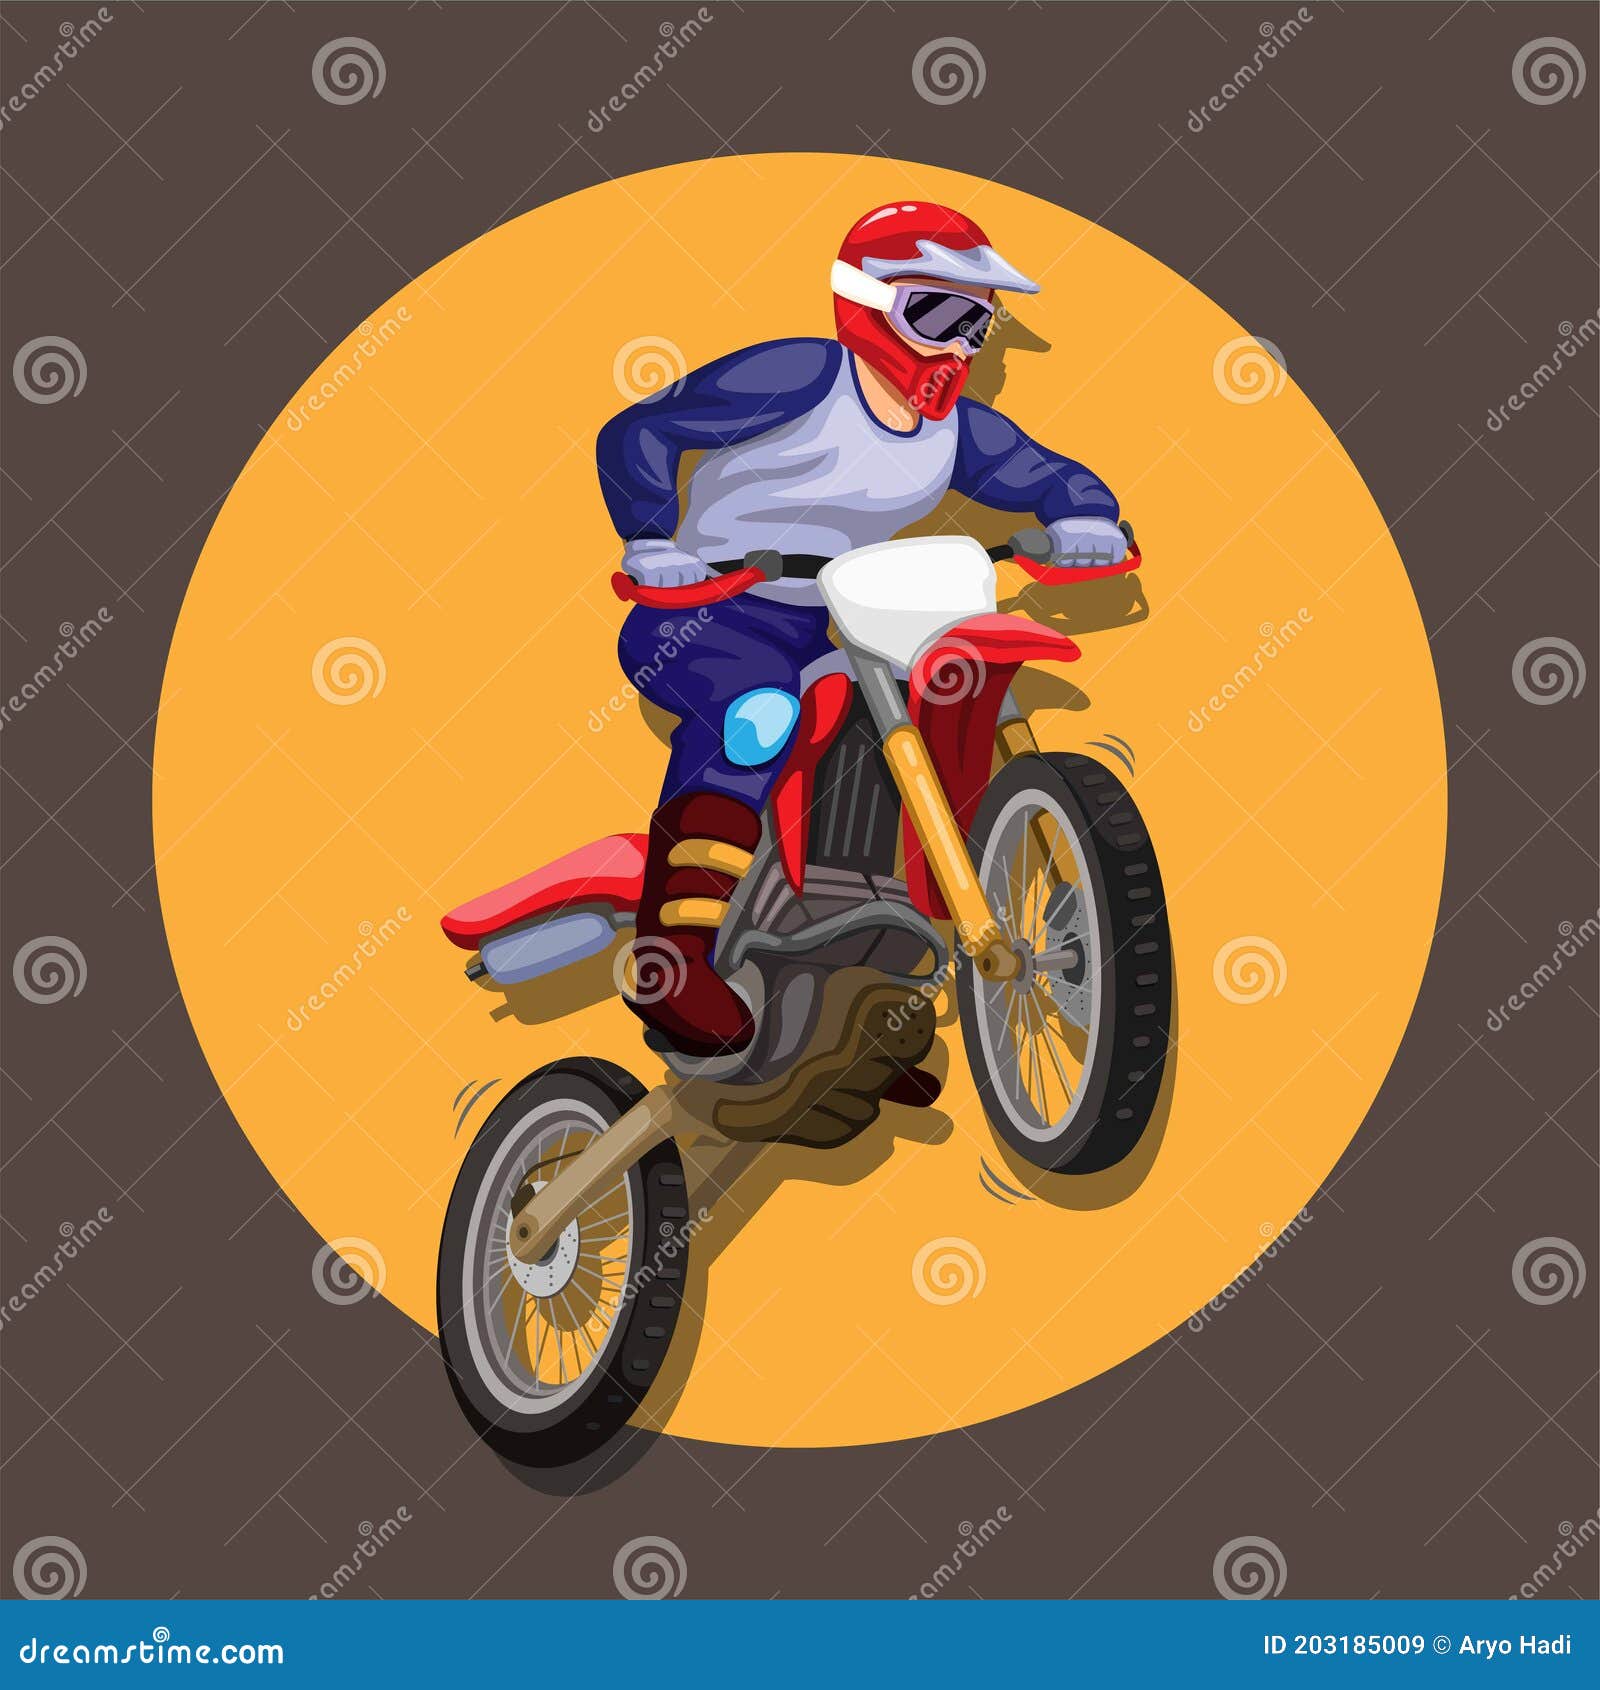 Motocross Rider Freestyle Action Character Mascot in Cartoon Illustration  Vector Stock Vector - Illustration of danger, motion: 203185009